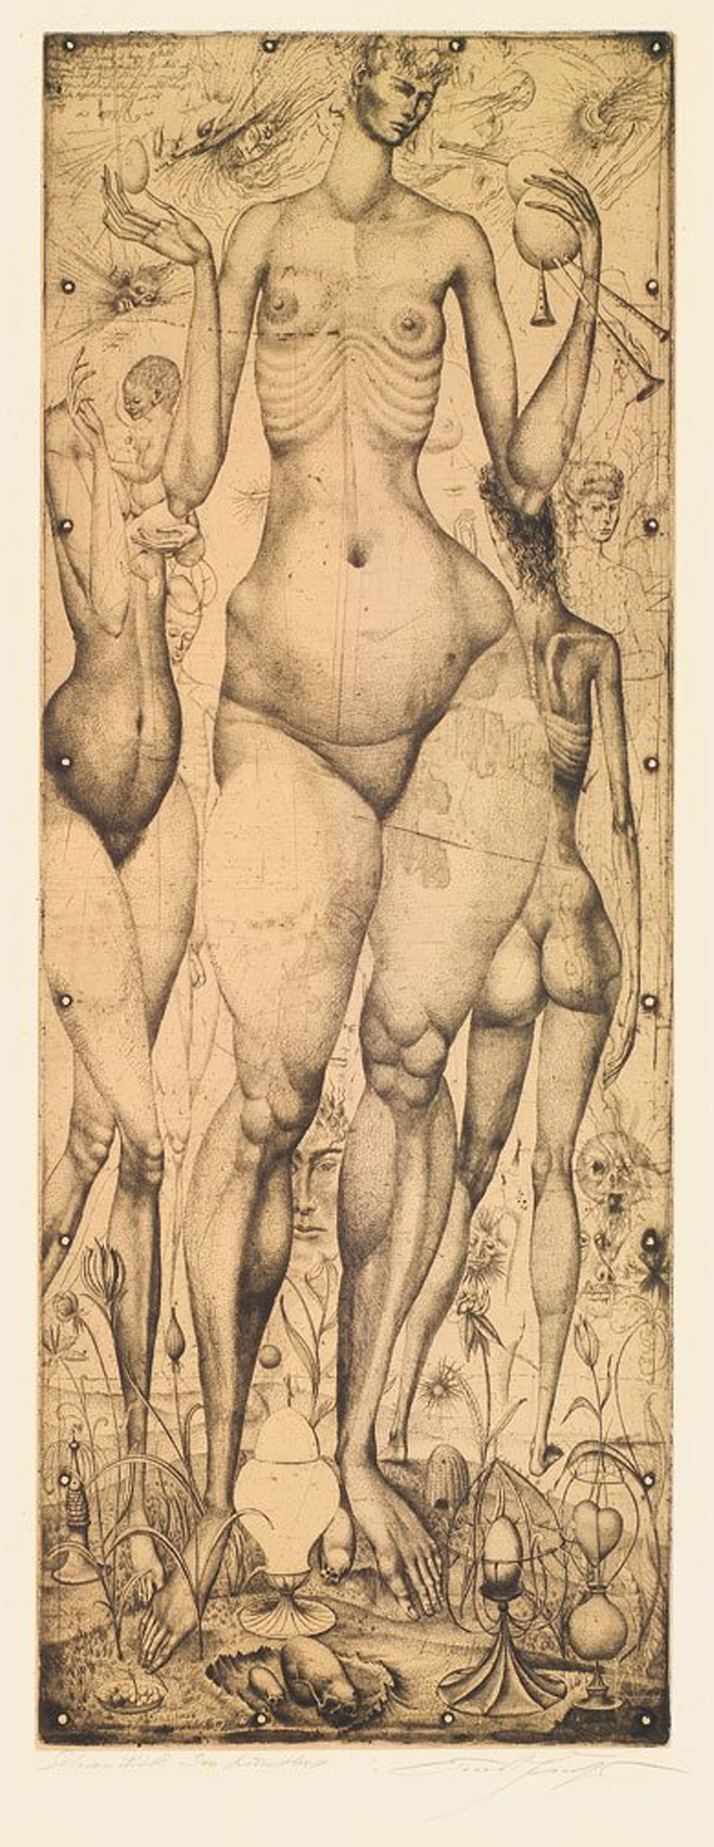 Ernst Fuchs (artist) art of the beautifulgrotesque The Art of Ernst Fuchs